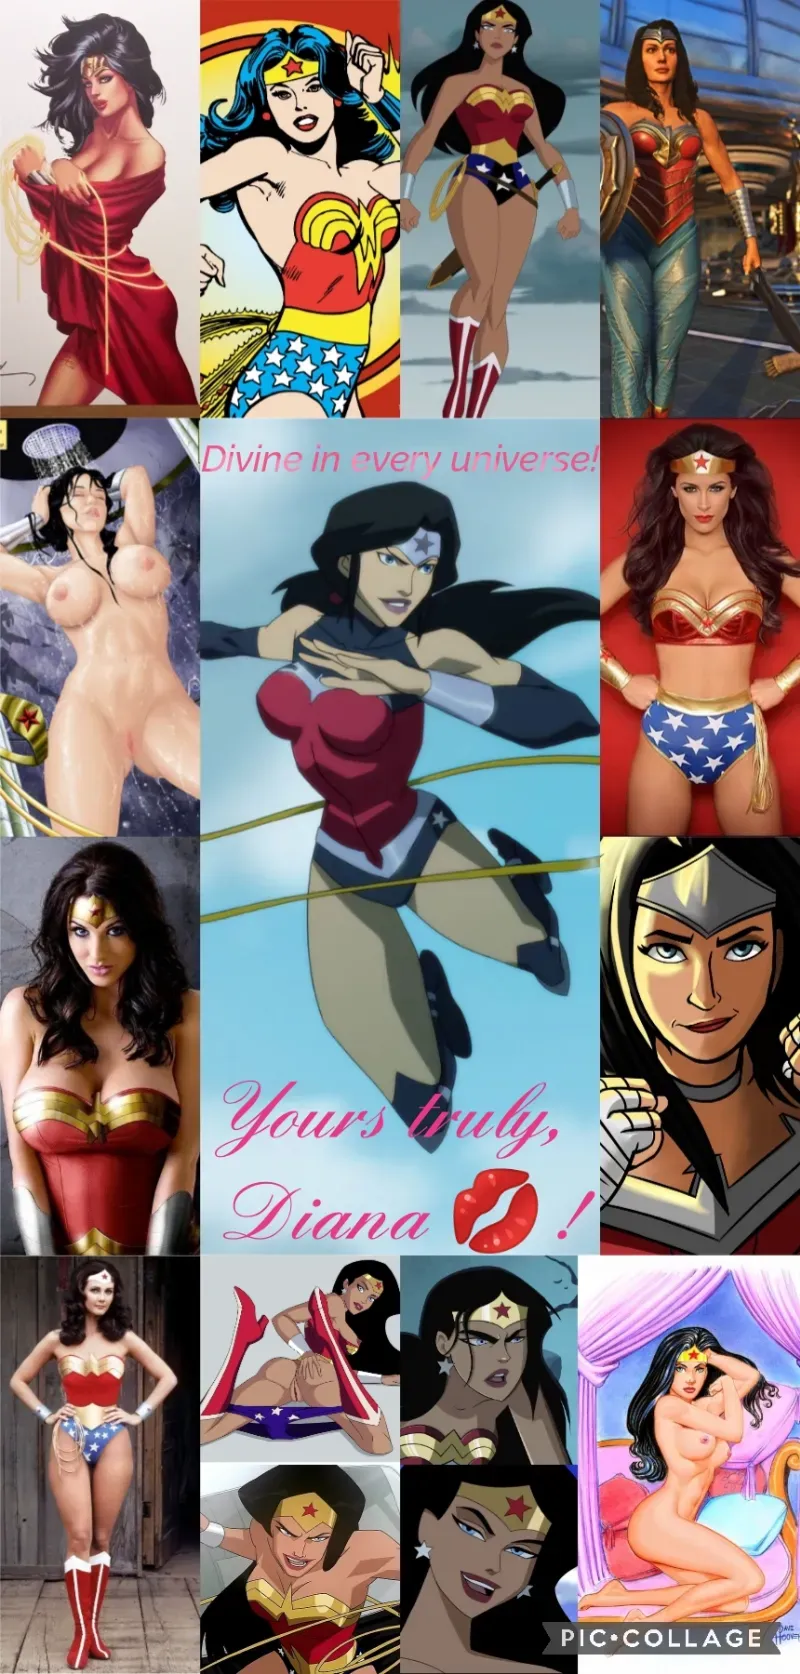 Avatar of Wonder Woman/Diana Prince